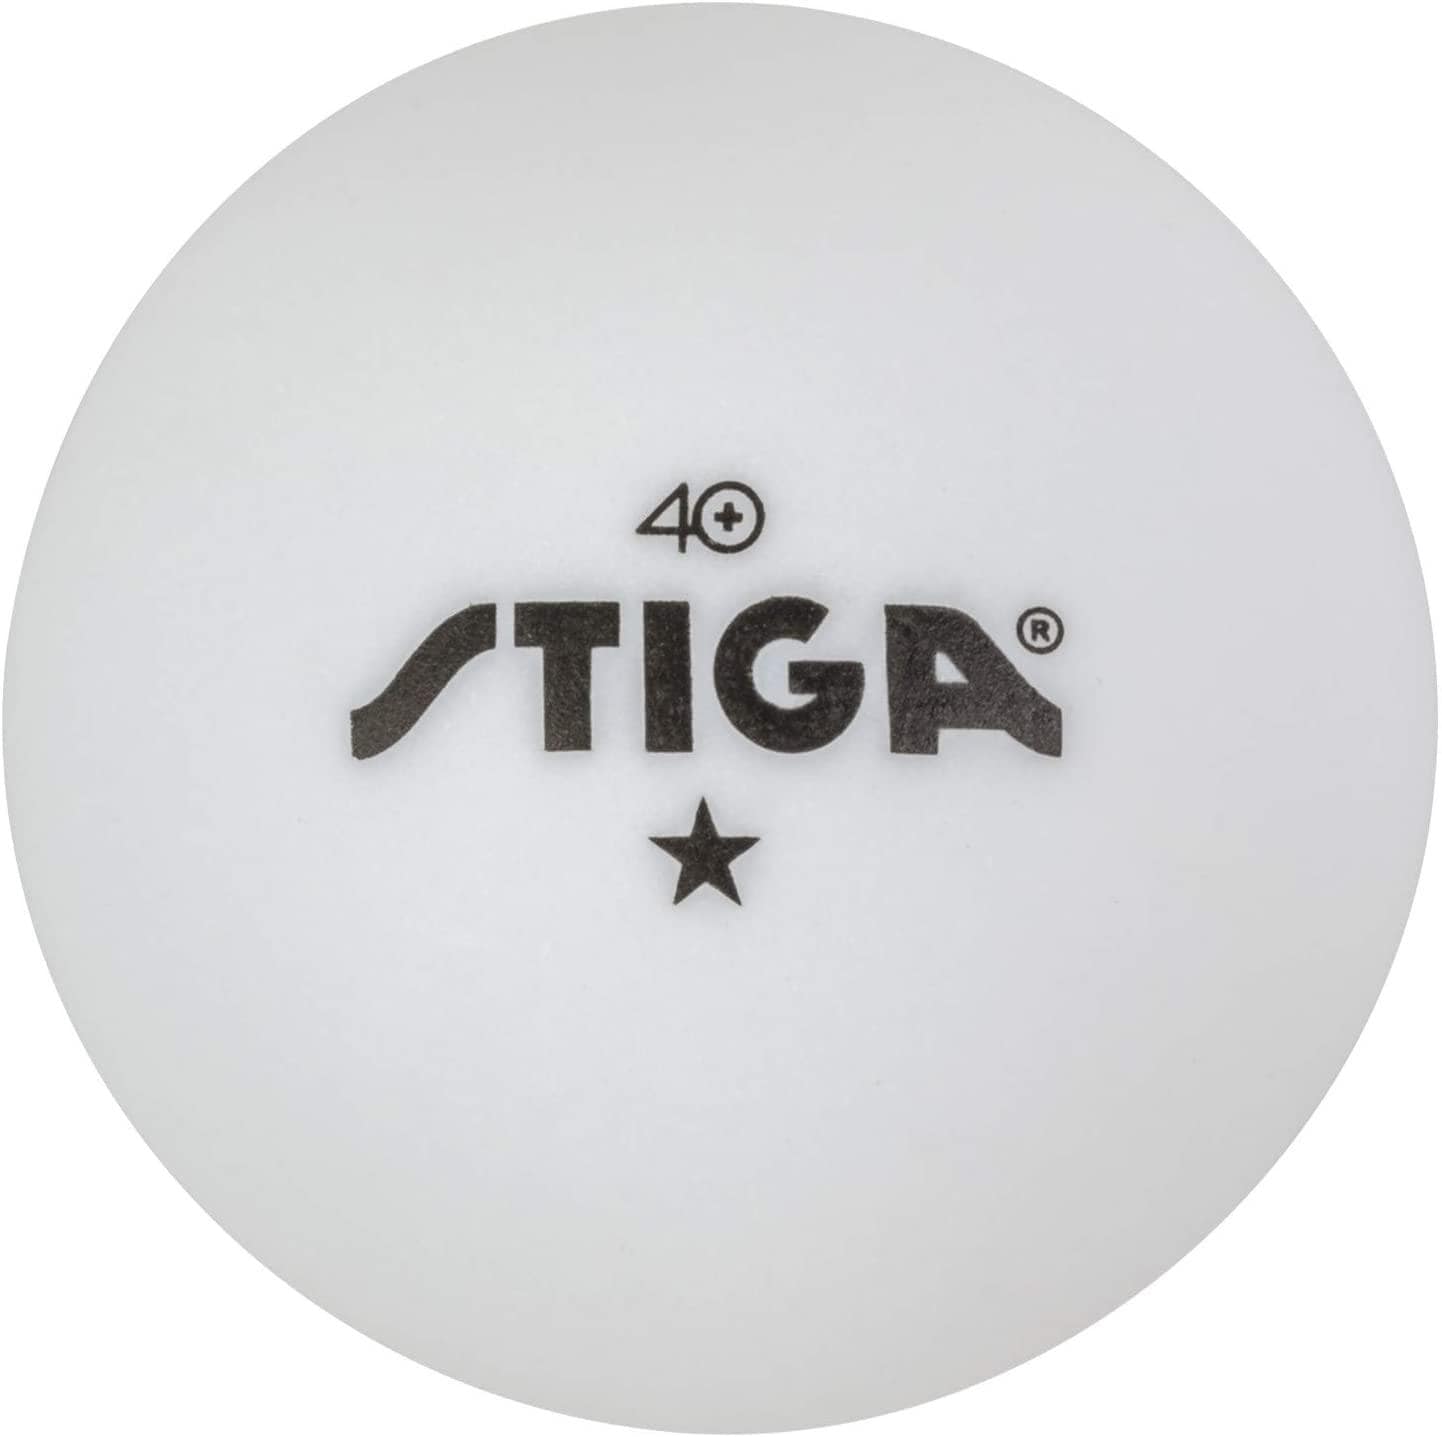 Stiga Table Tennis STIGA - Classic Table Tennis Set (4-Player Set), Red - T1335